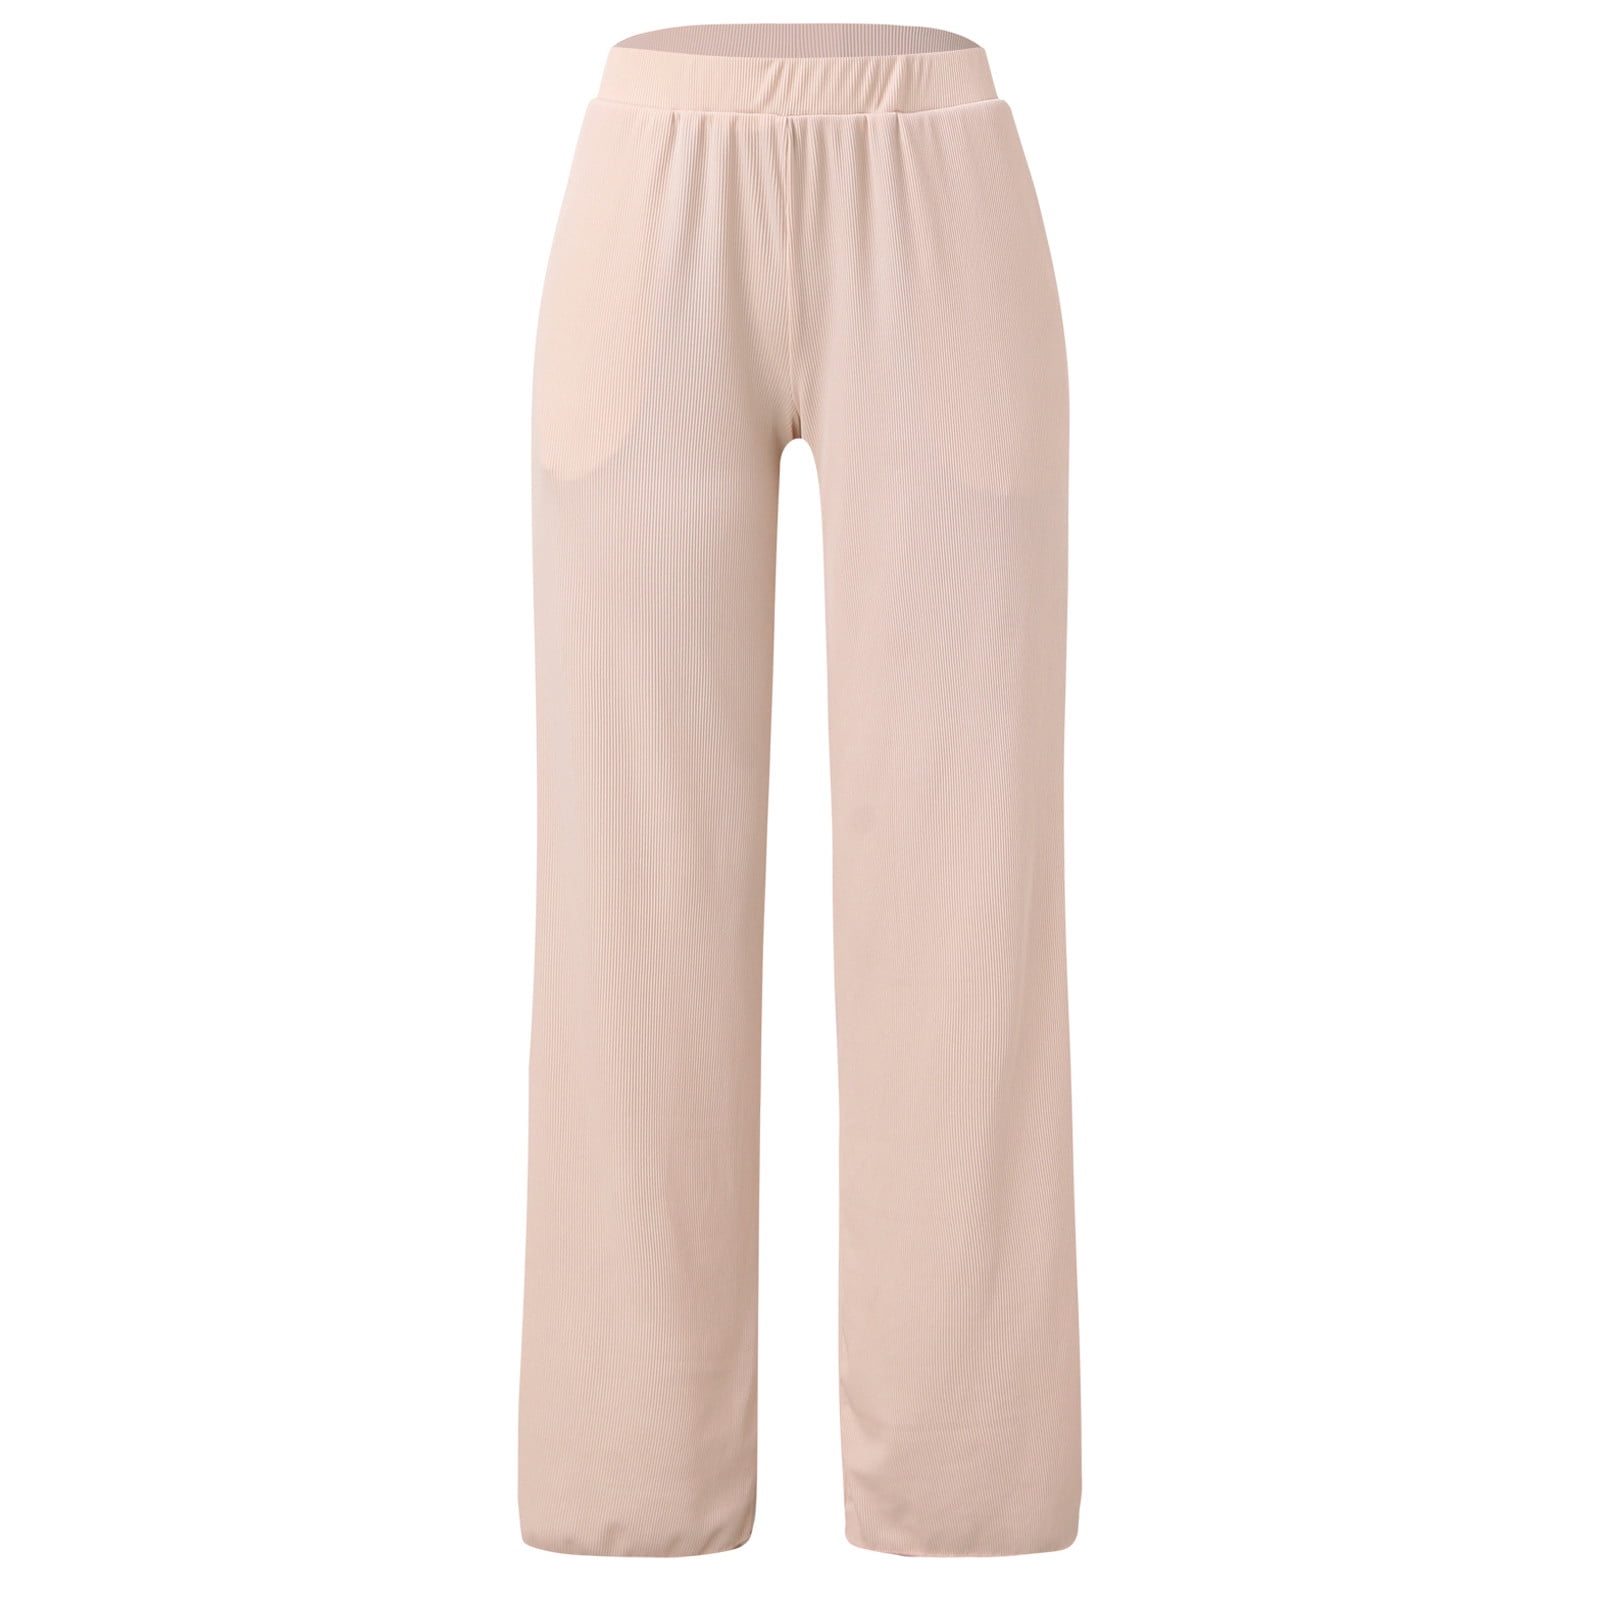 Aayomet Sweat Pants Women's EcoSmart Petite Open Bottom Leg Sweatpants,Pink  XL 